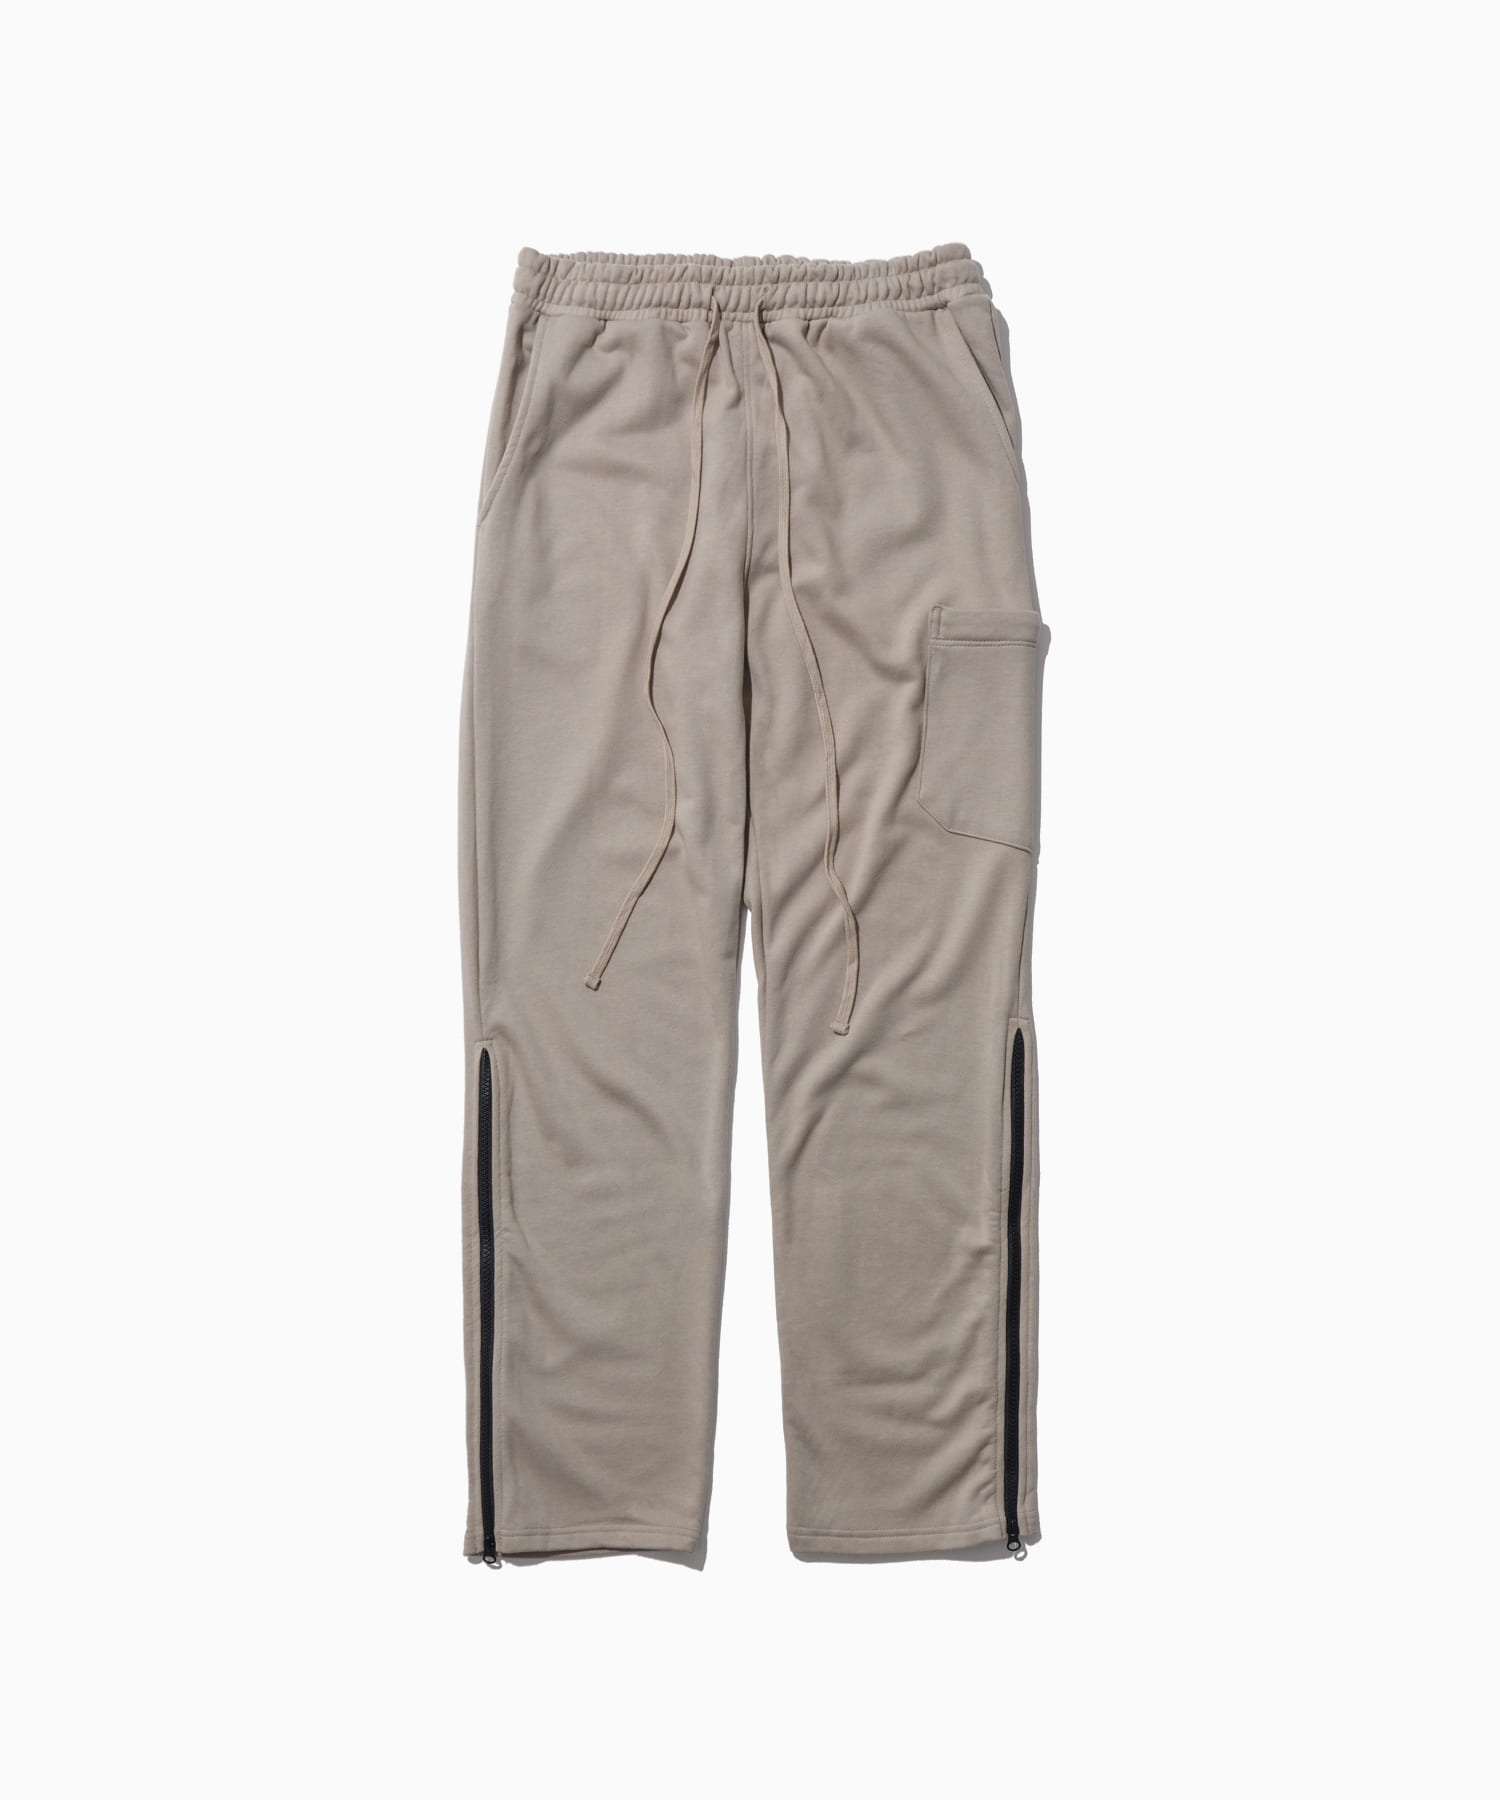 side zipper sweat pants taupe - 로어링라드(ROARINGRAD)